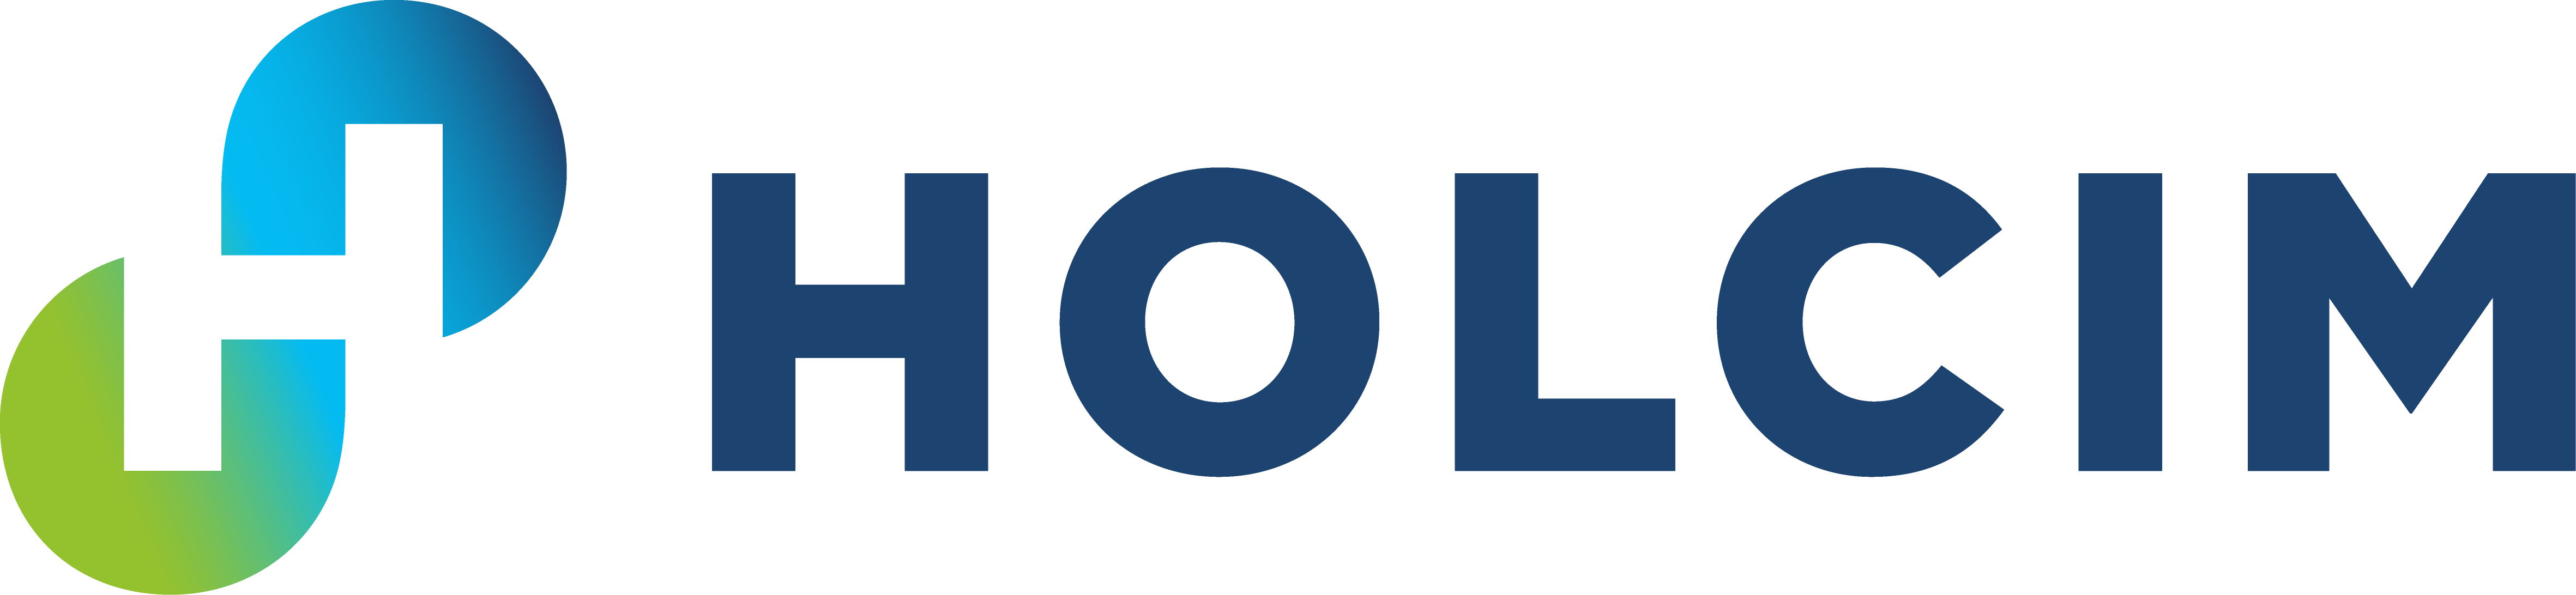 footer logo holcim